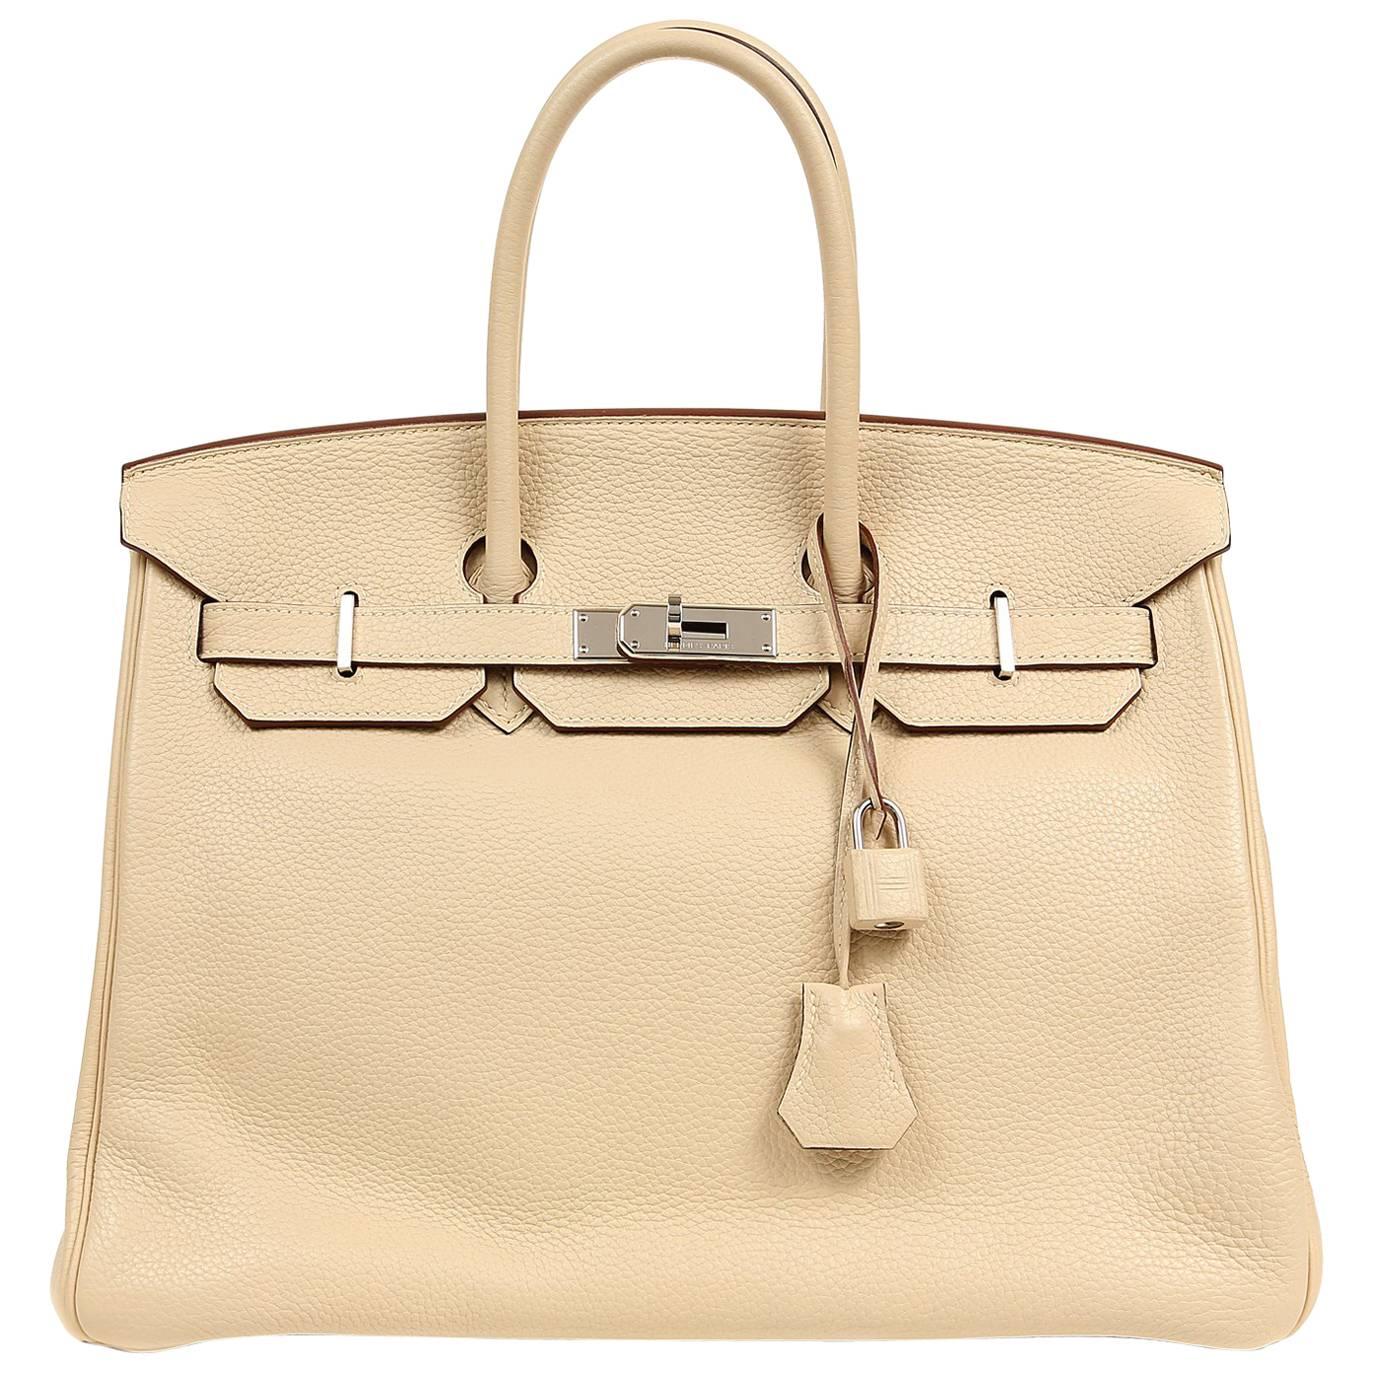 Hermès Parchemin Togo 35 cm Birkin Bag For Sale